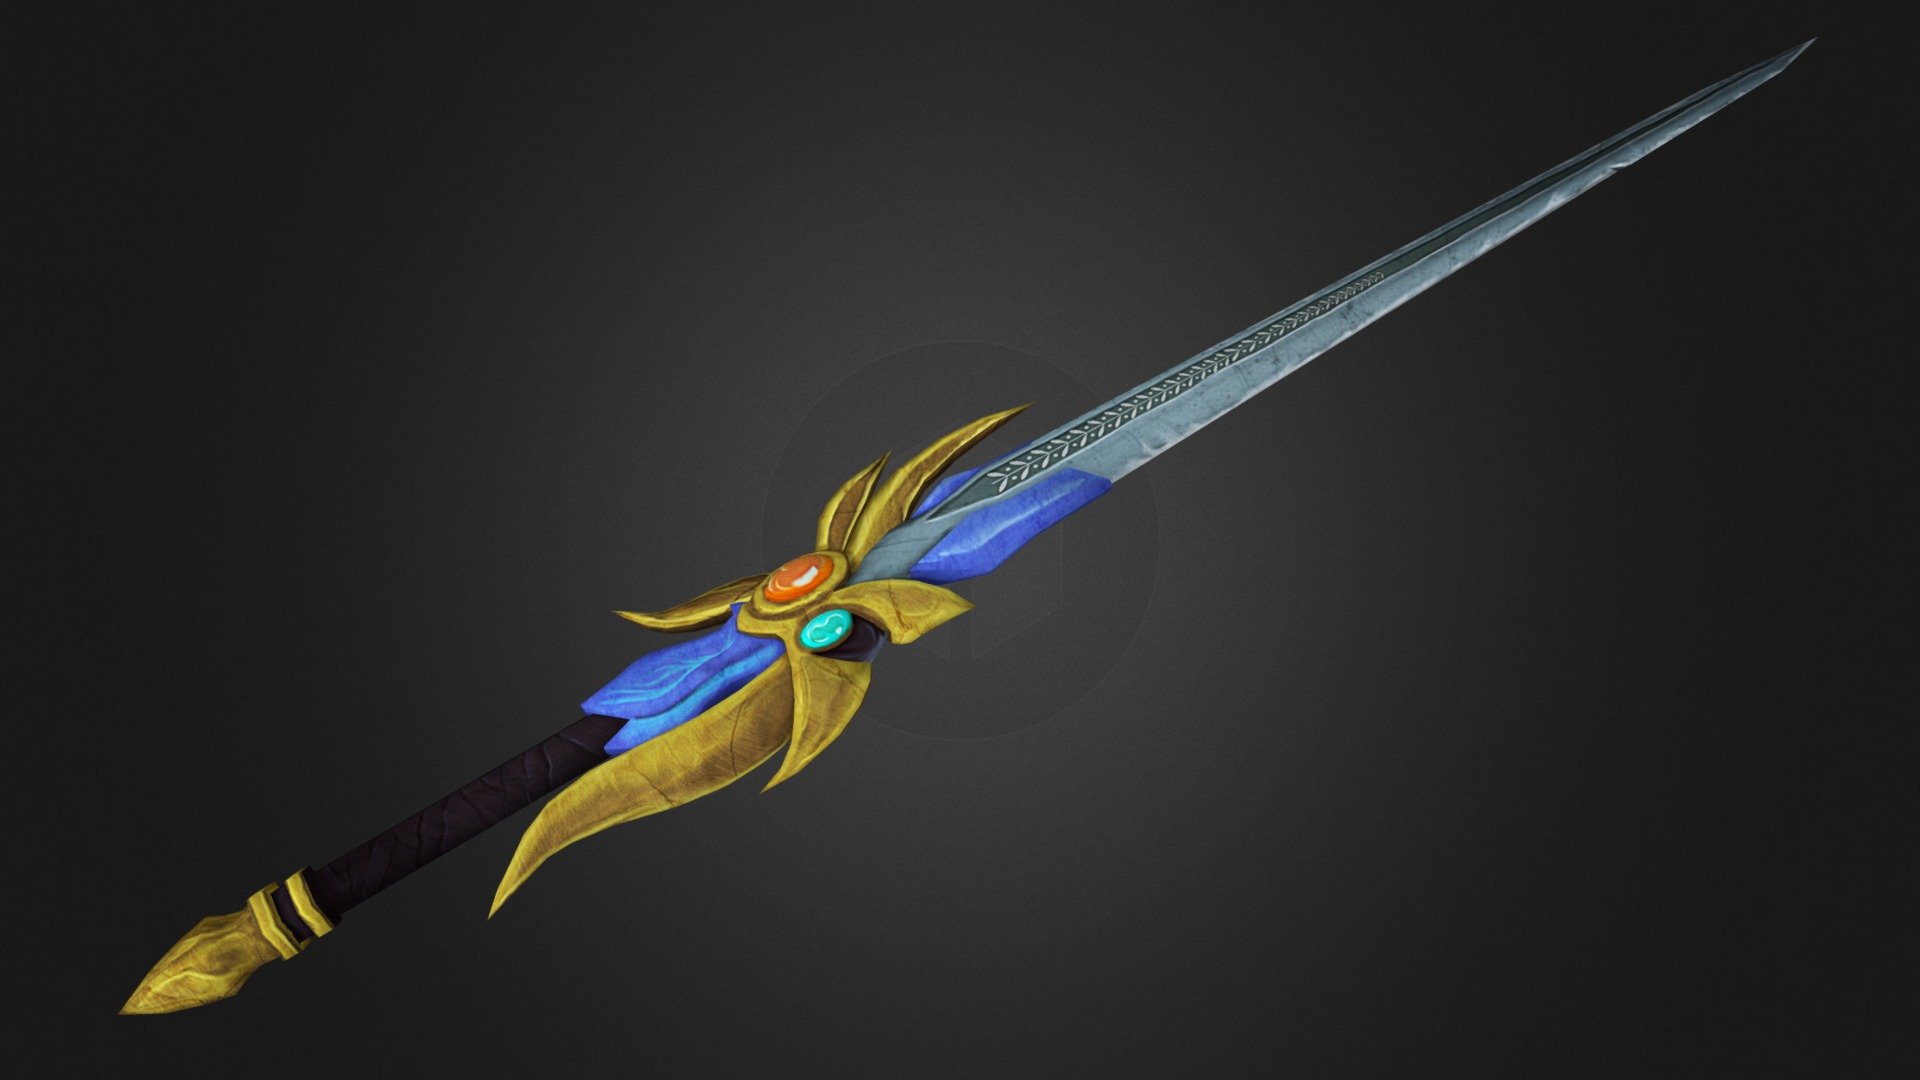 Sword low poly game asset - Download Free 3D model by imagineburner 3d model